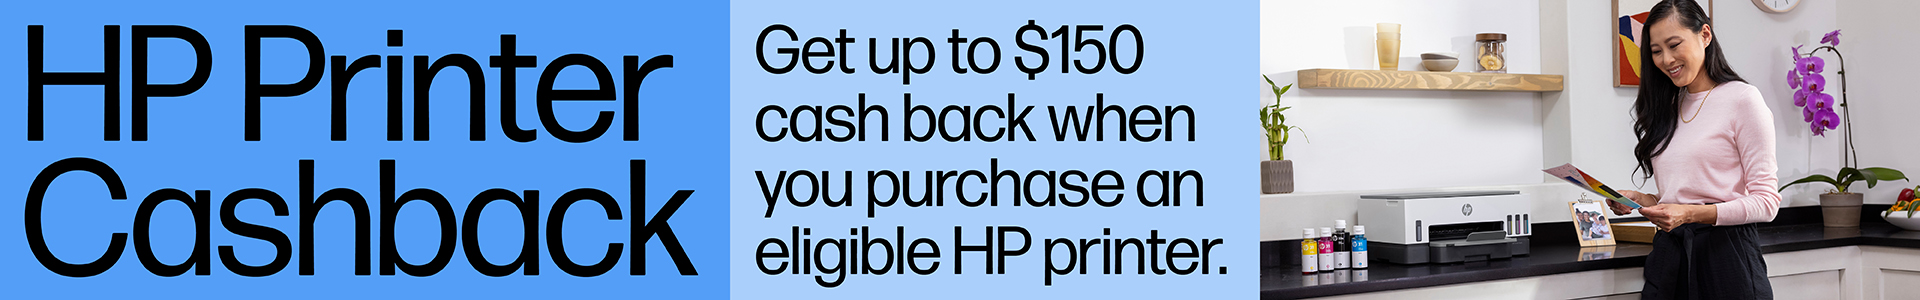 HP Printer Cashback